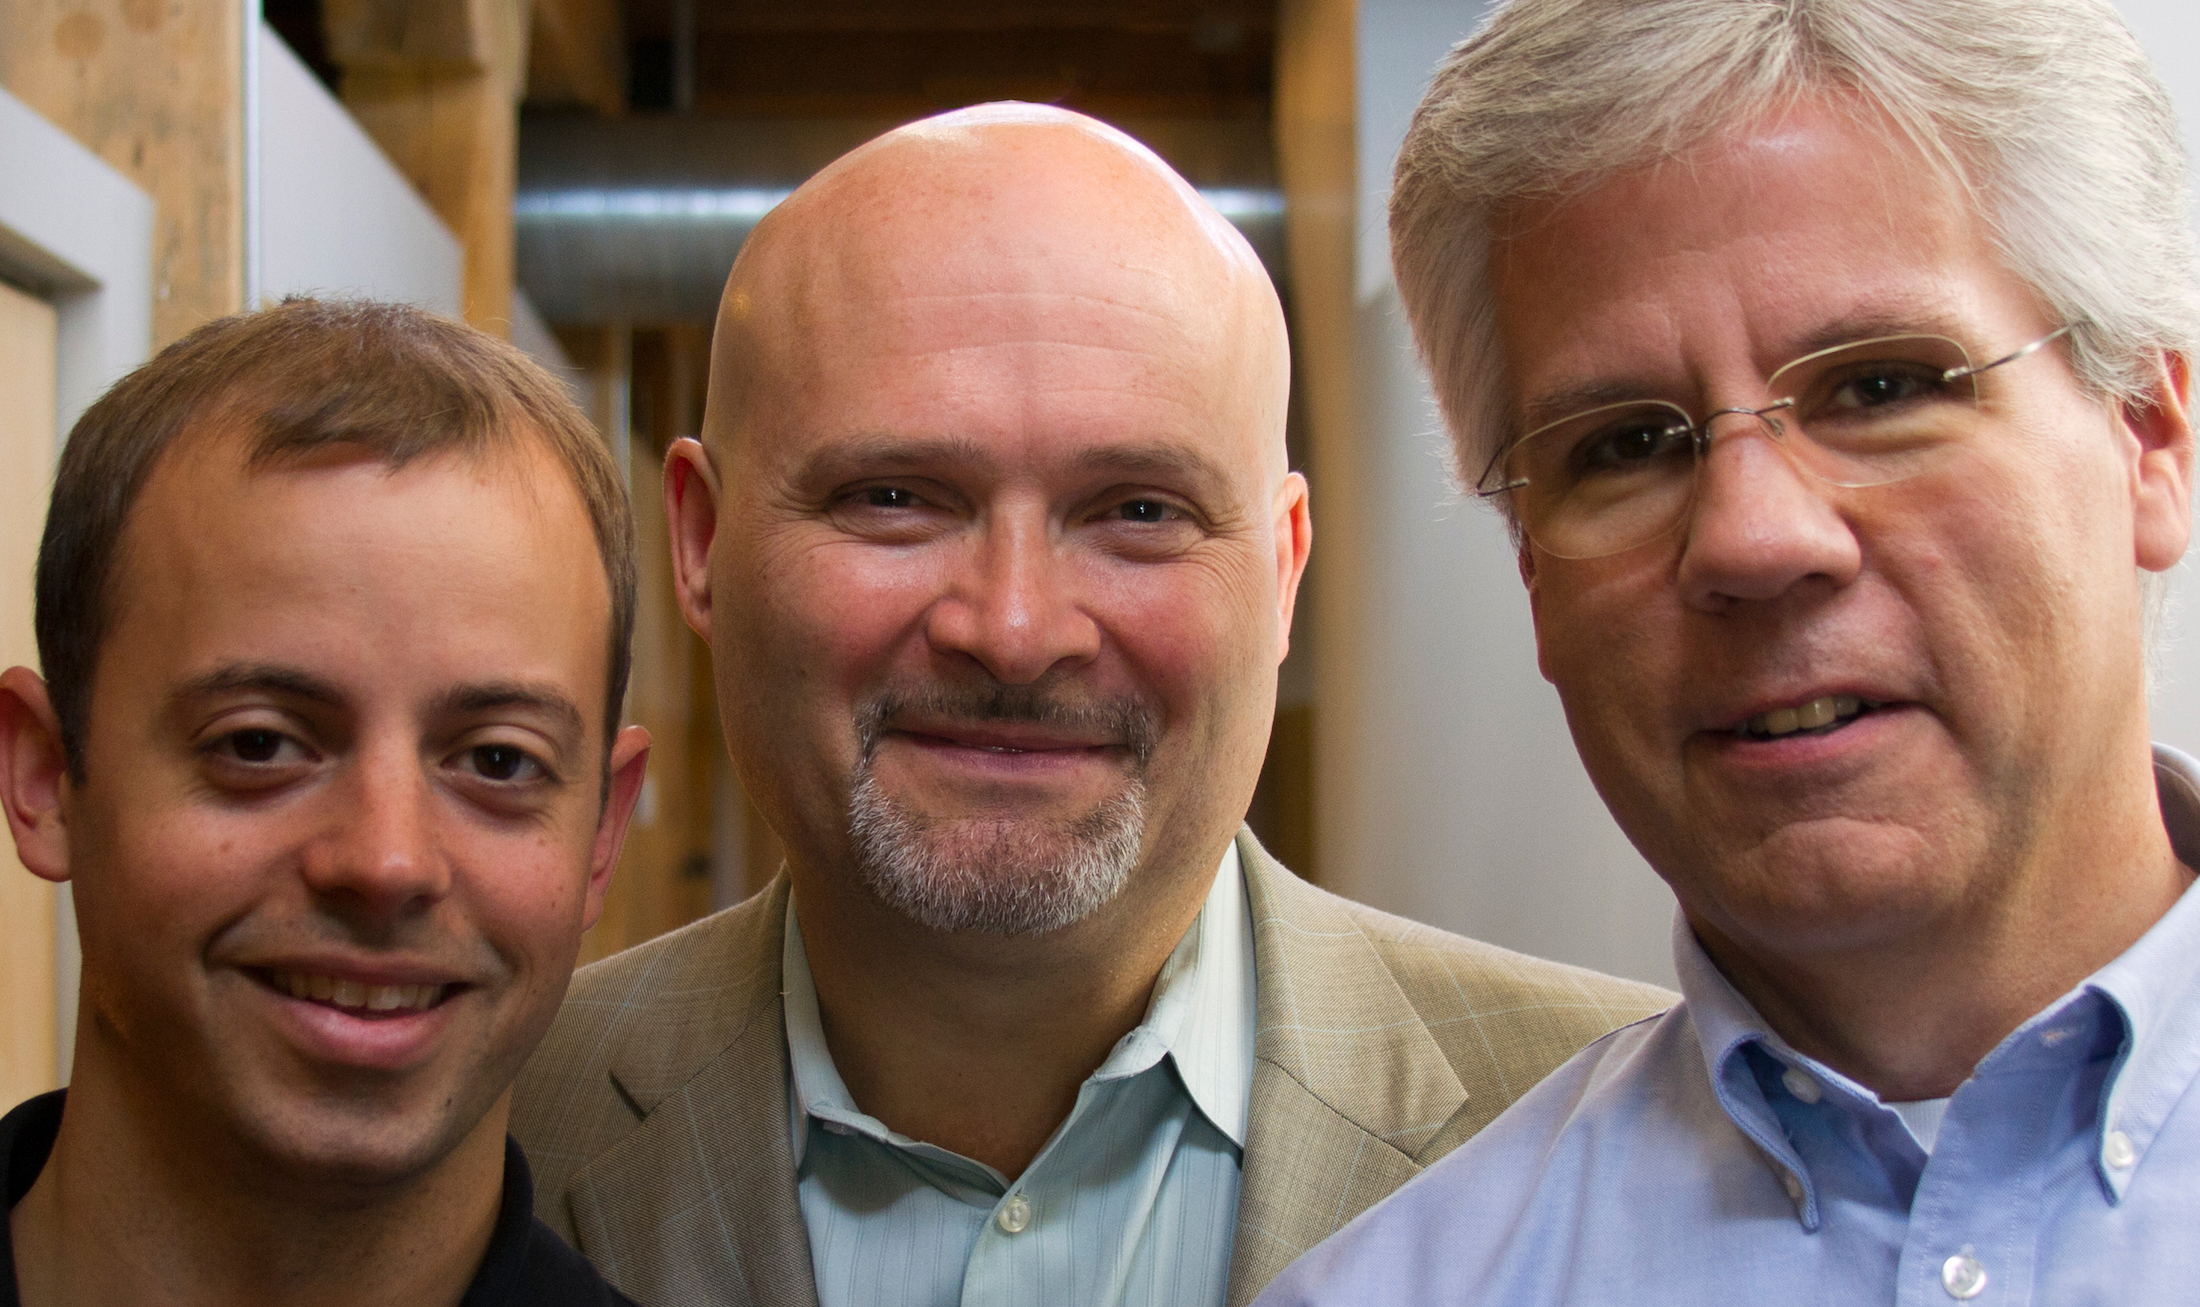 QFO Labs founding team (l to r): John Condon, CTO; Brad Pedersen, CEO; Jim Fairman, COO.